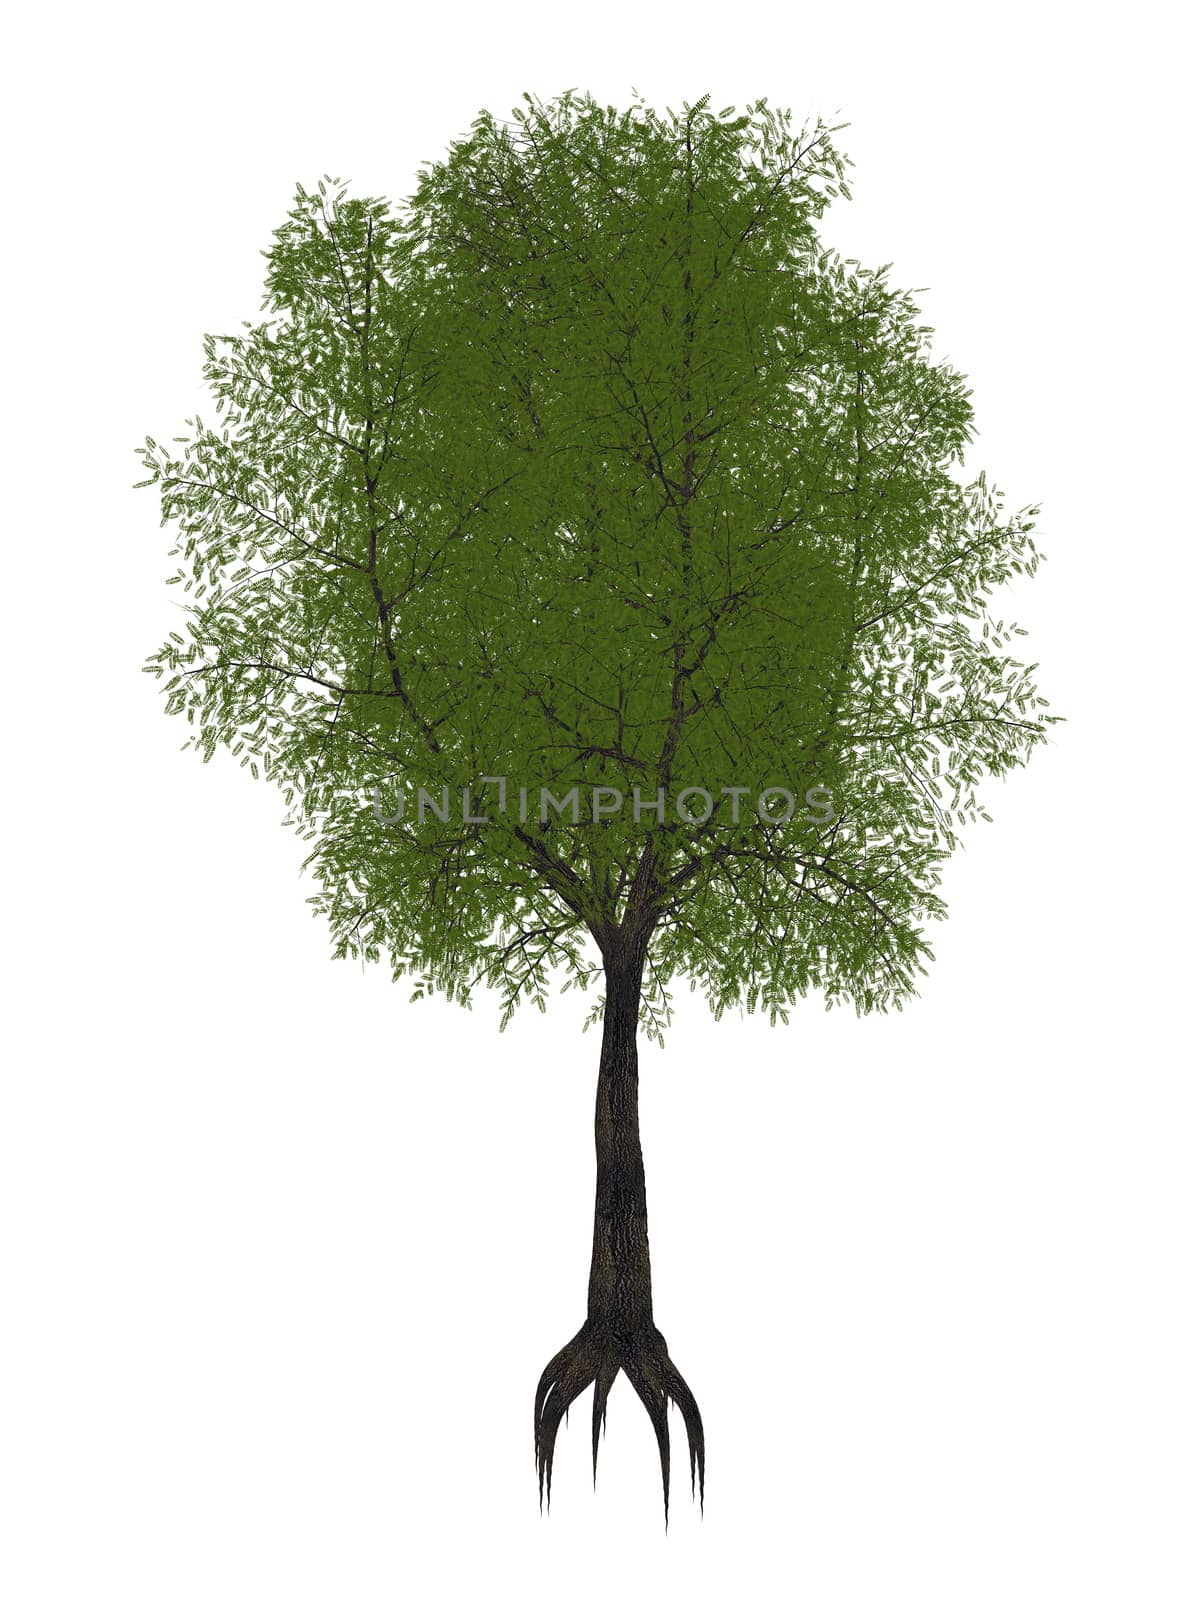 Tamarind tree, tamarindus indica - 3D render by Elenaphotos21